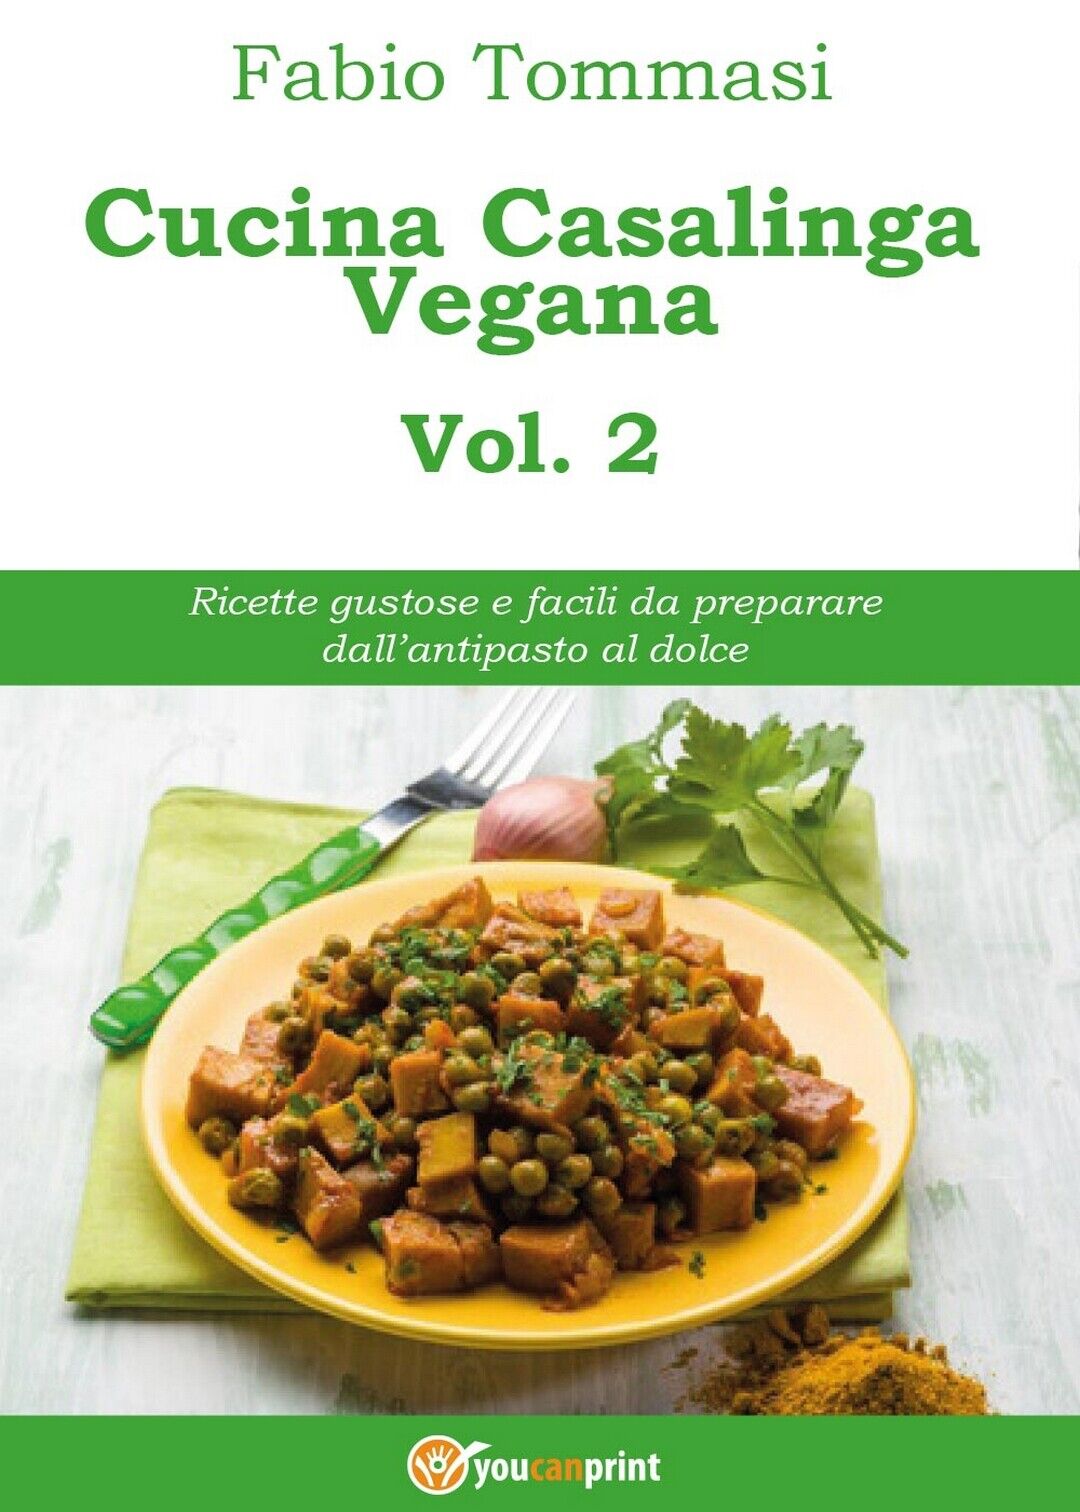 Cucina Casalinga Vegana Vol. 2  di Fabio Tommasi,  2016,  Youcanprint